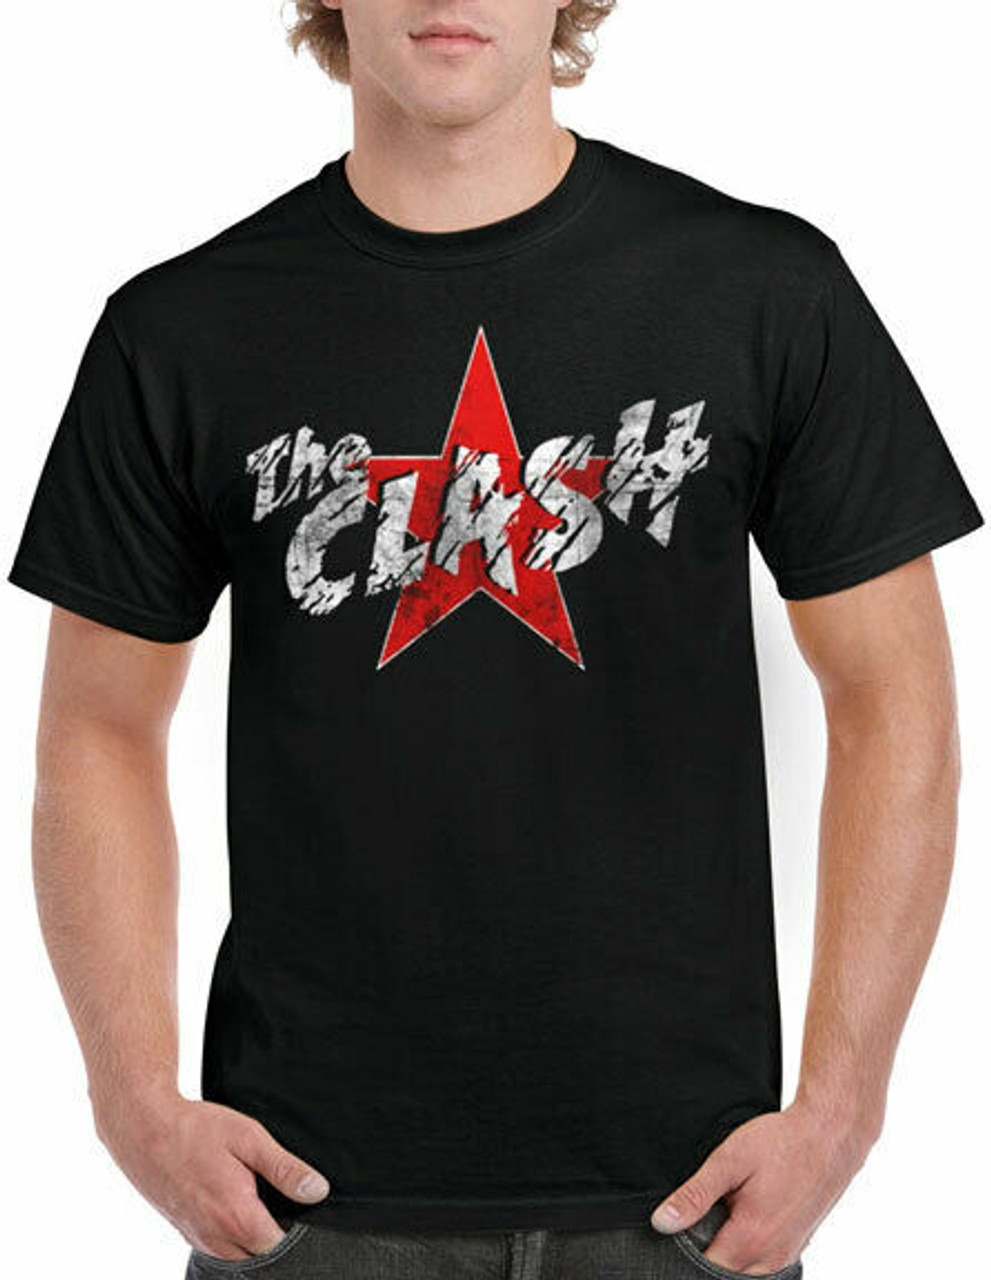 H3 Sportgear The Clash Star Logo Punk Rock New Wave 70s 80s Music Band T Shirt CLA10076 - 2XL Regular